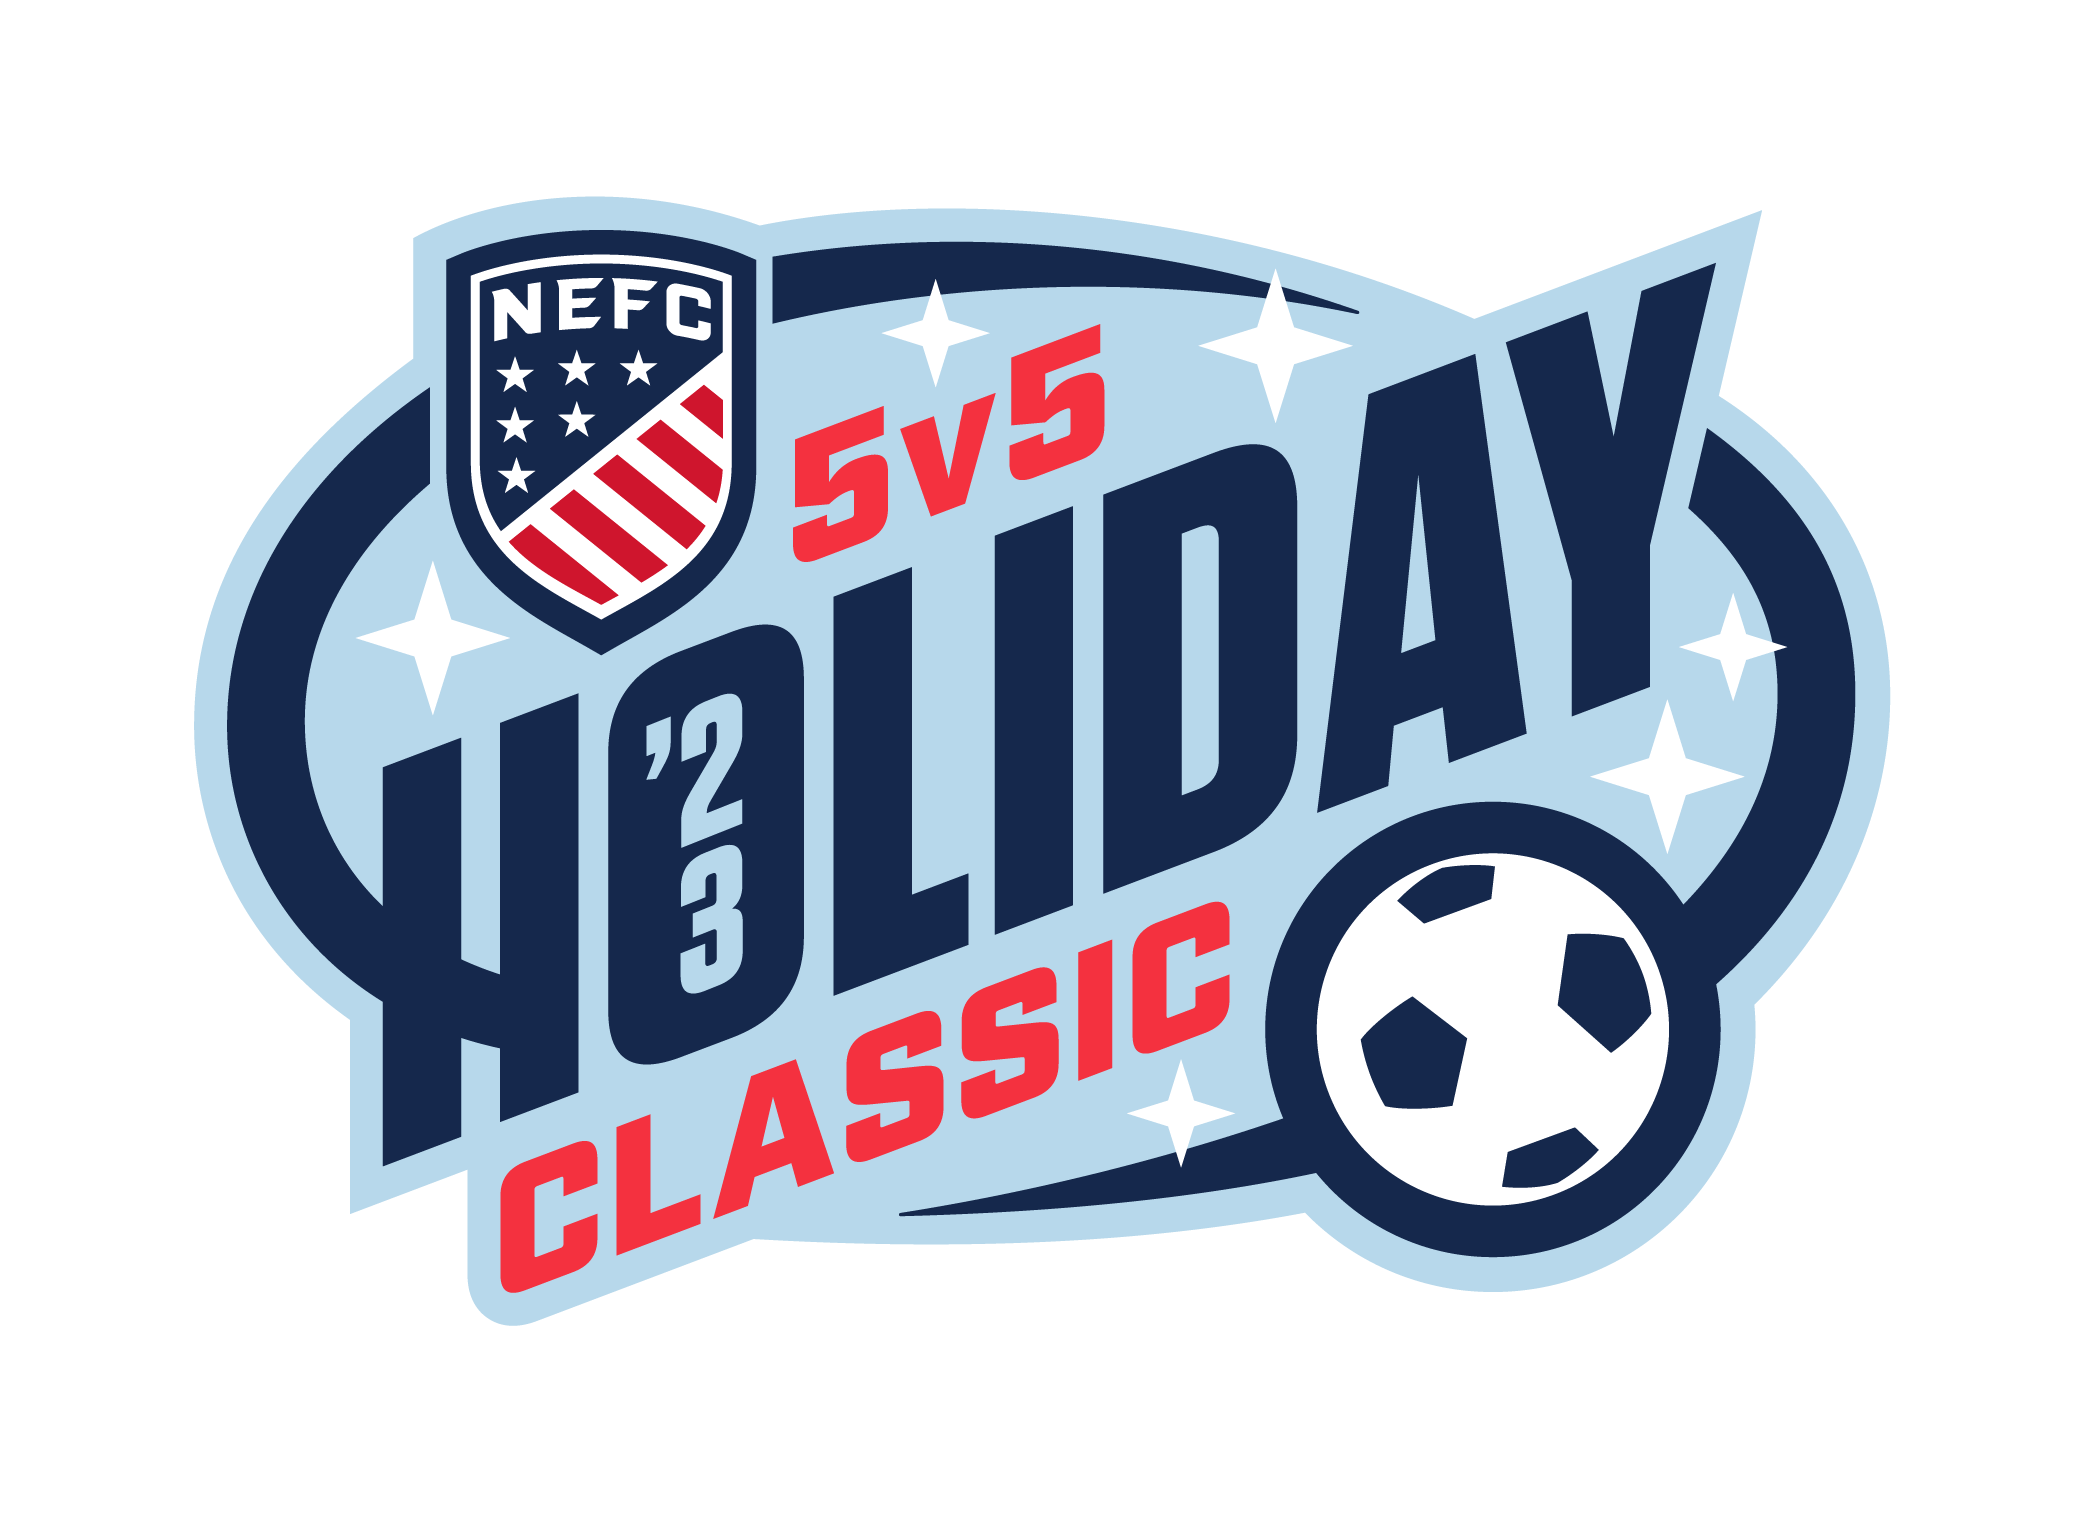 NEFC_digital_HolidayClassic_FC